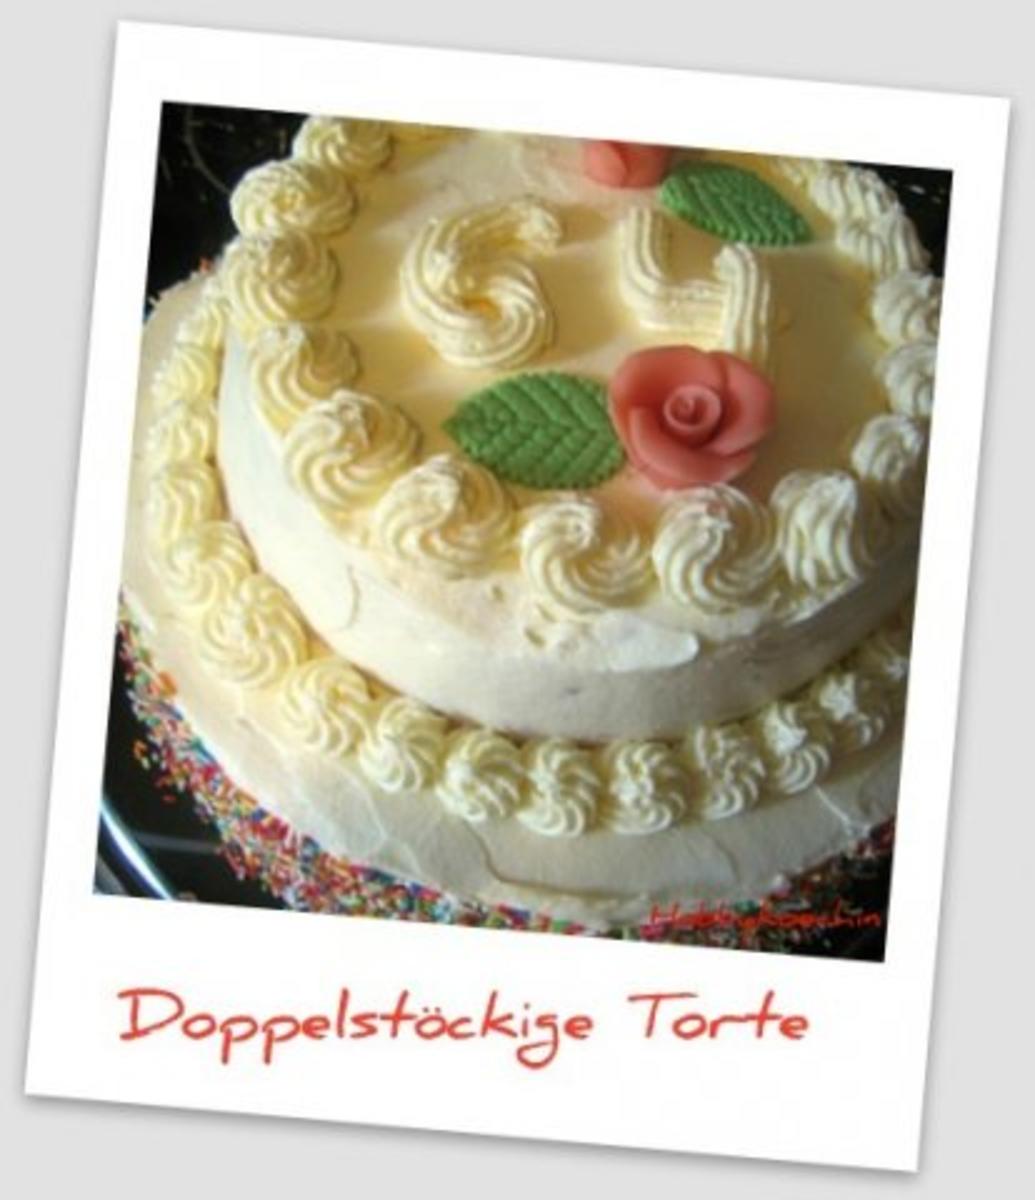 Doppelstöckige Torte - Himbeer-Vanille-Traum - Rezept